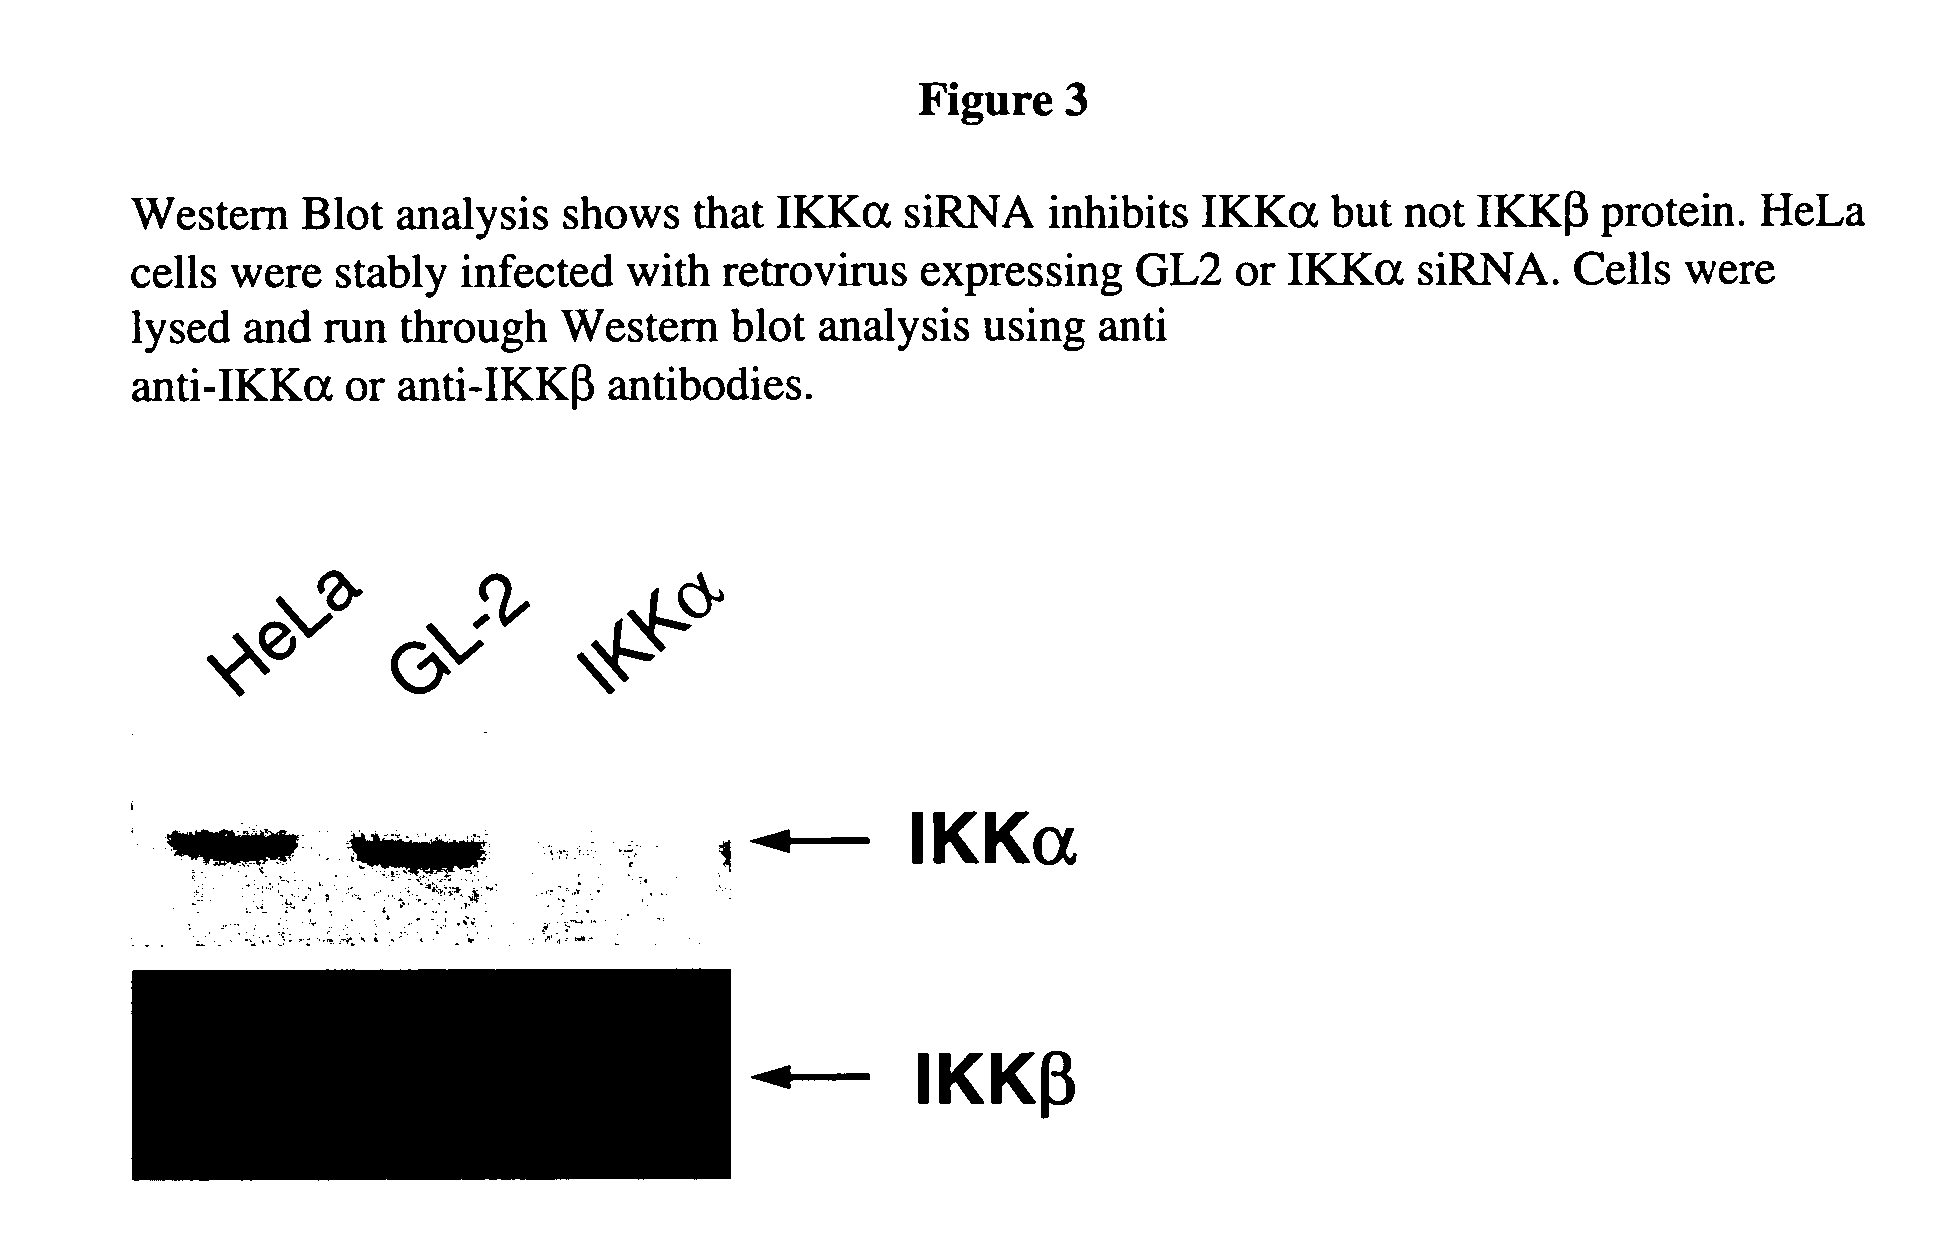 IKKalpha and IKKbeta specific inhibitors